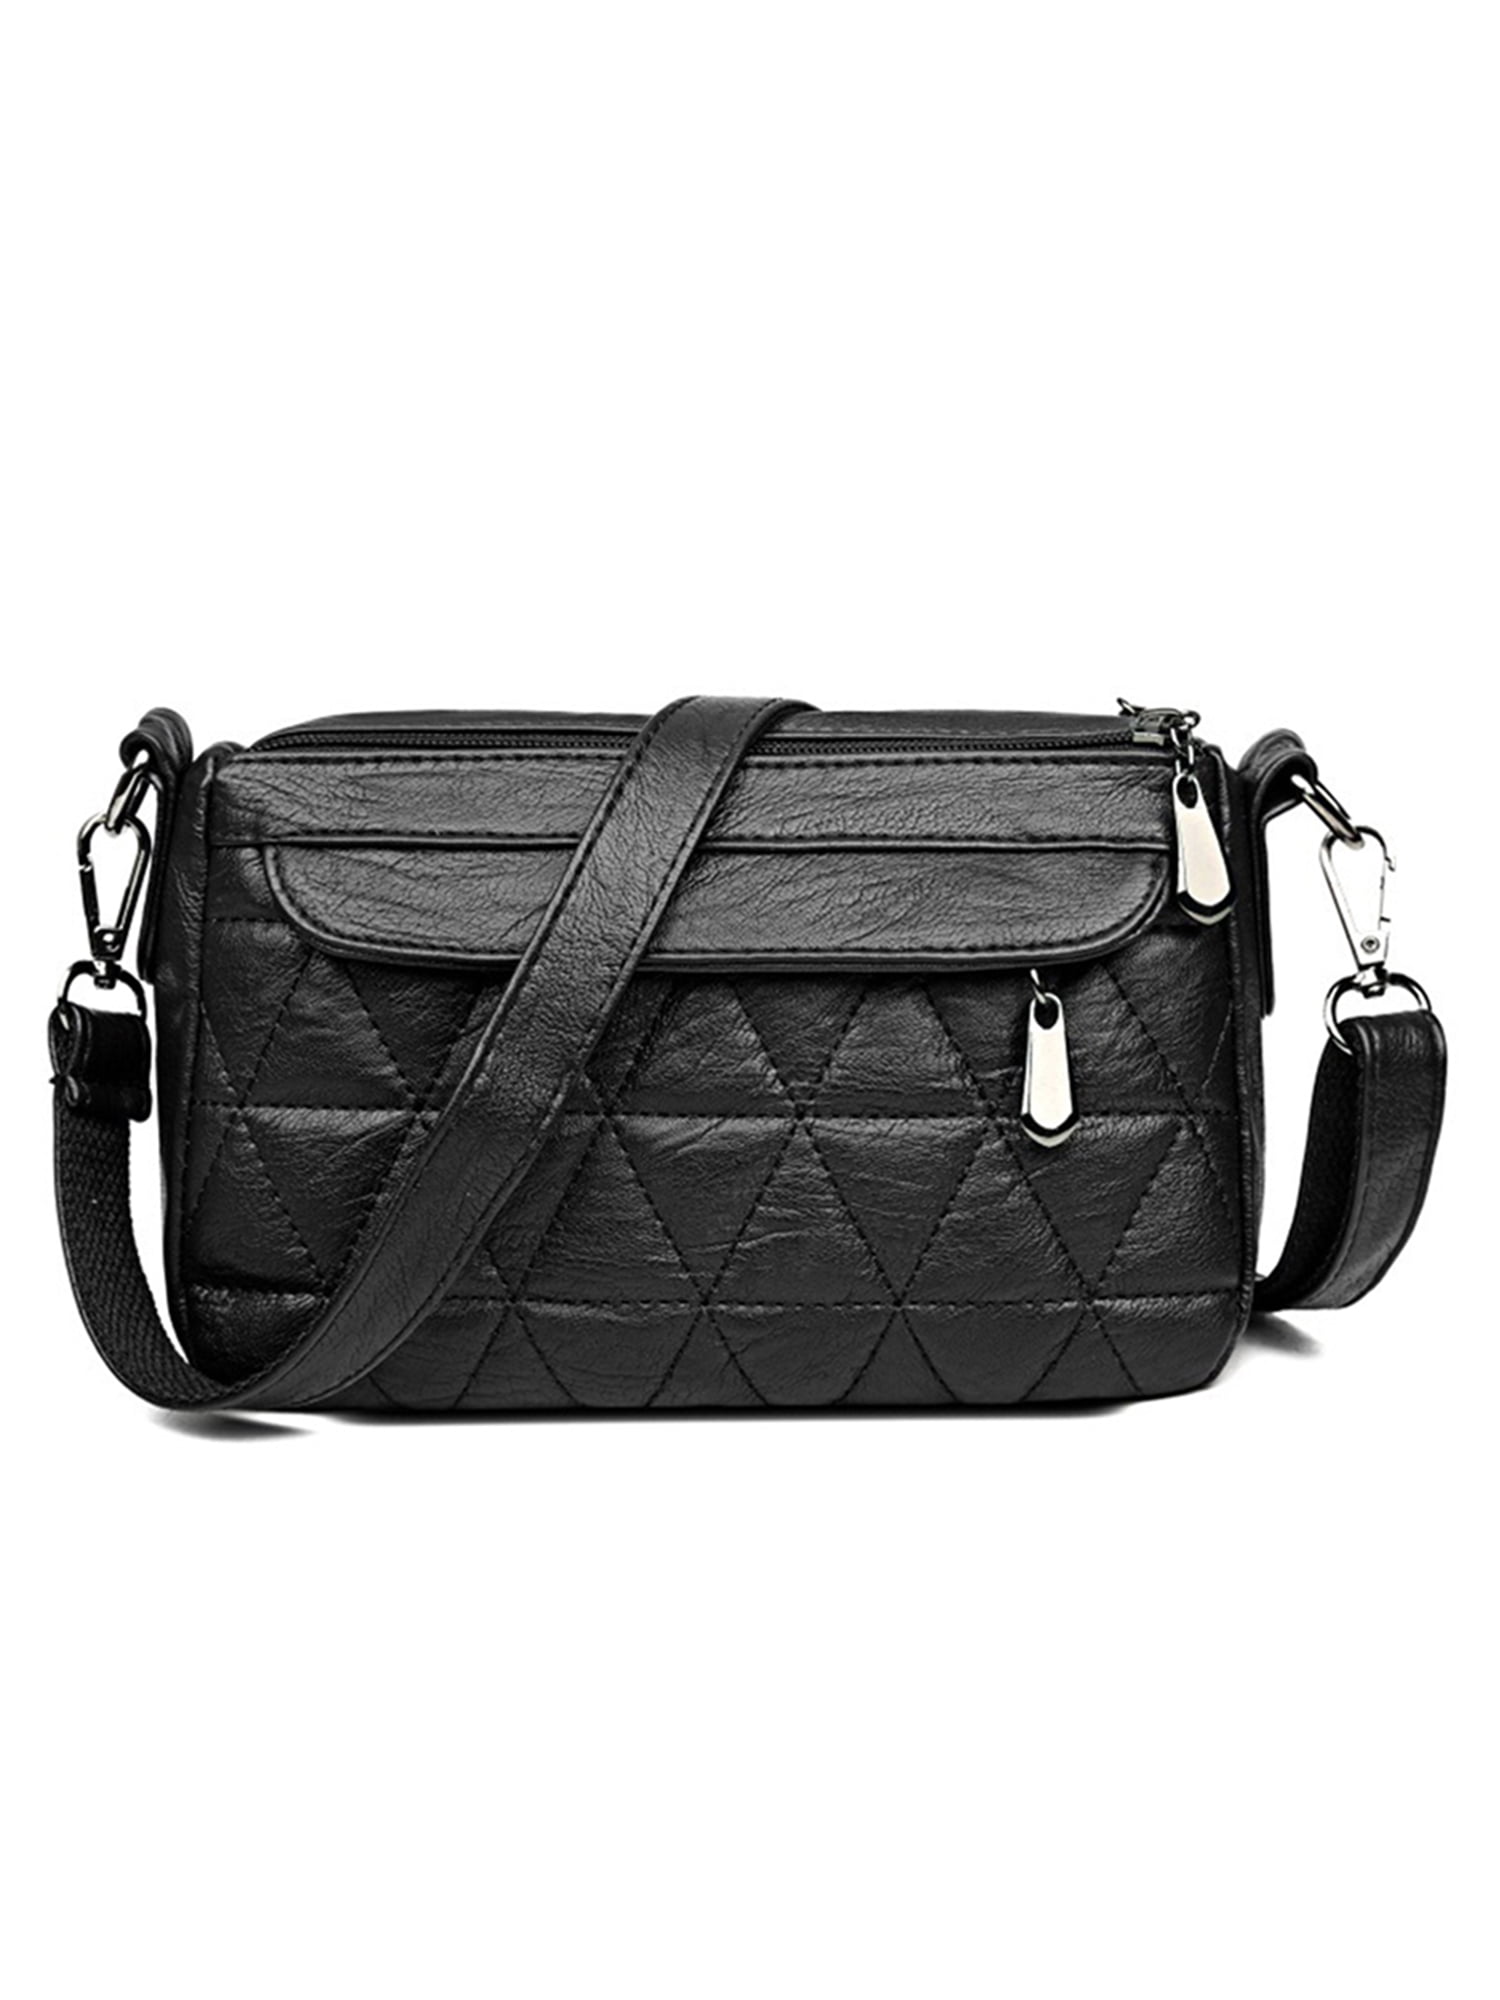 Avamo Women Crossbody Bag Zipper Shoulder Bags Large Capacity Detachable Purse Multi Pockets